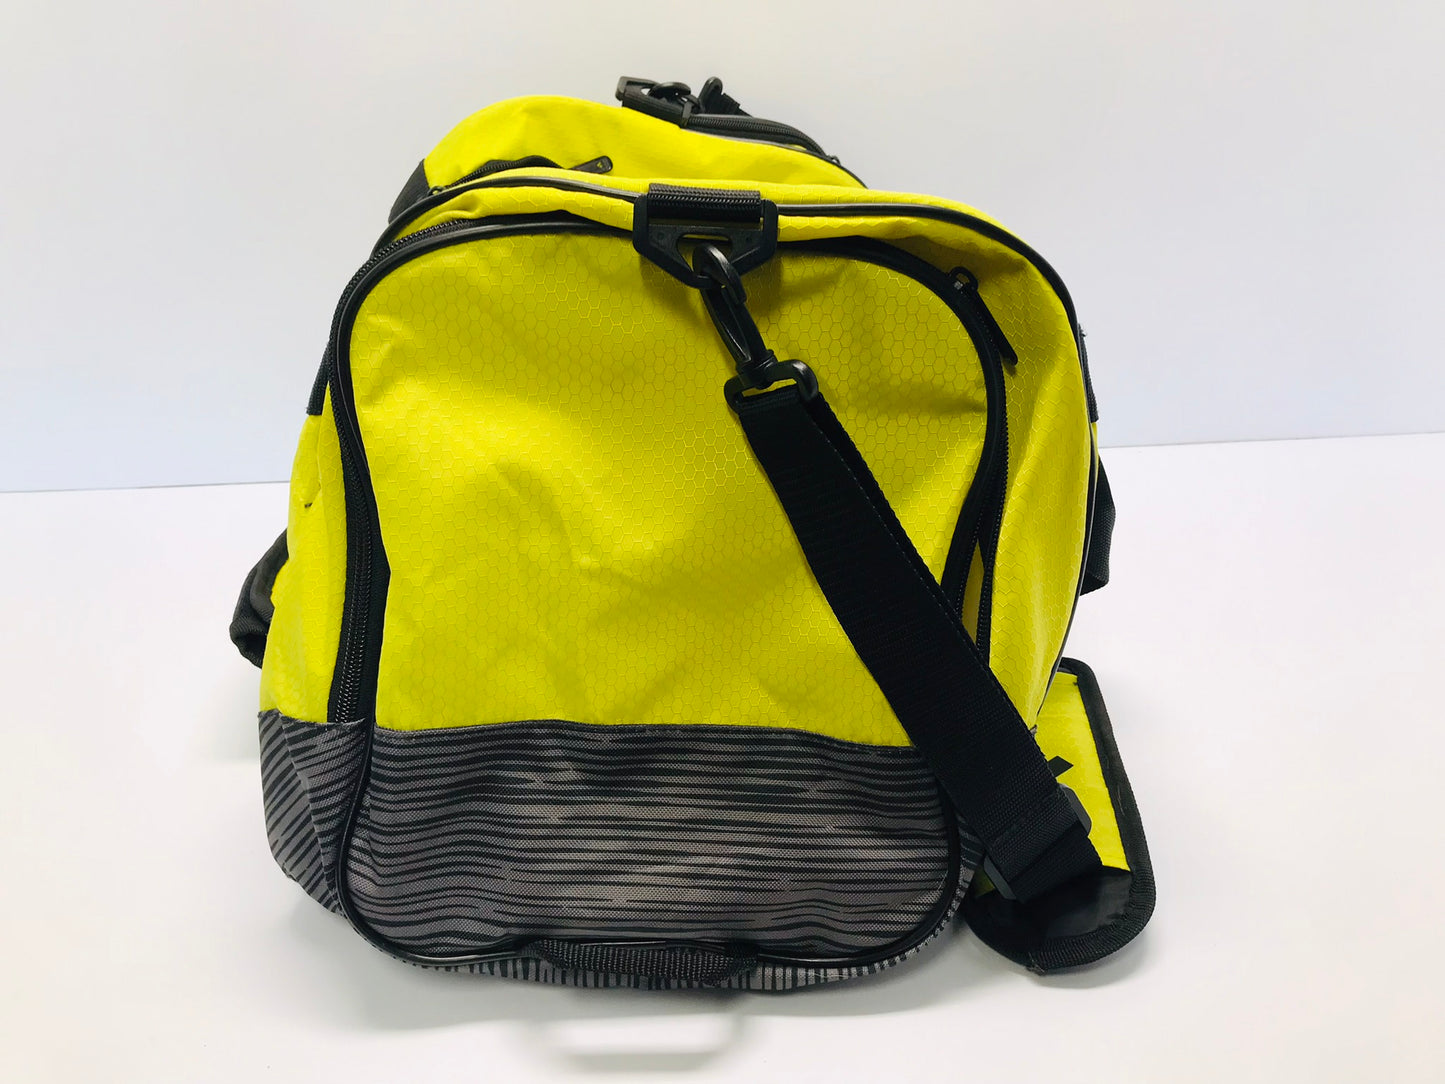 Adidas Sports Gym Travel Bag Lime Black Like New Used 1 Day